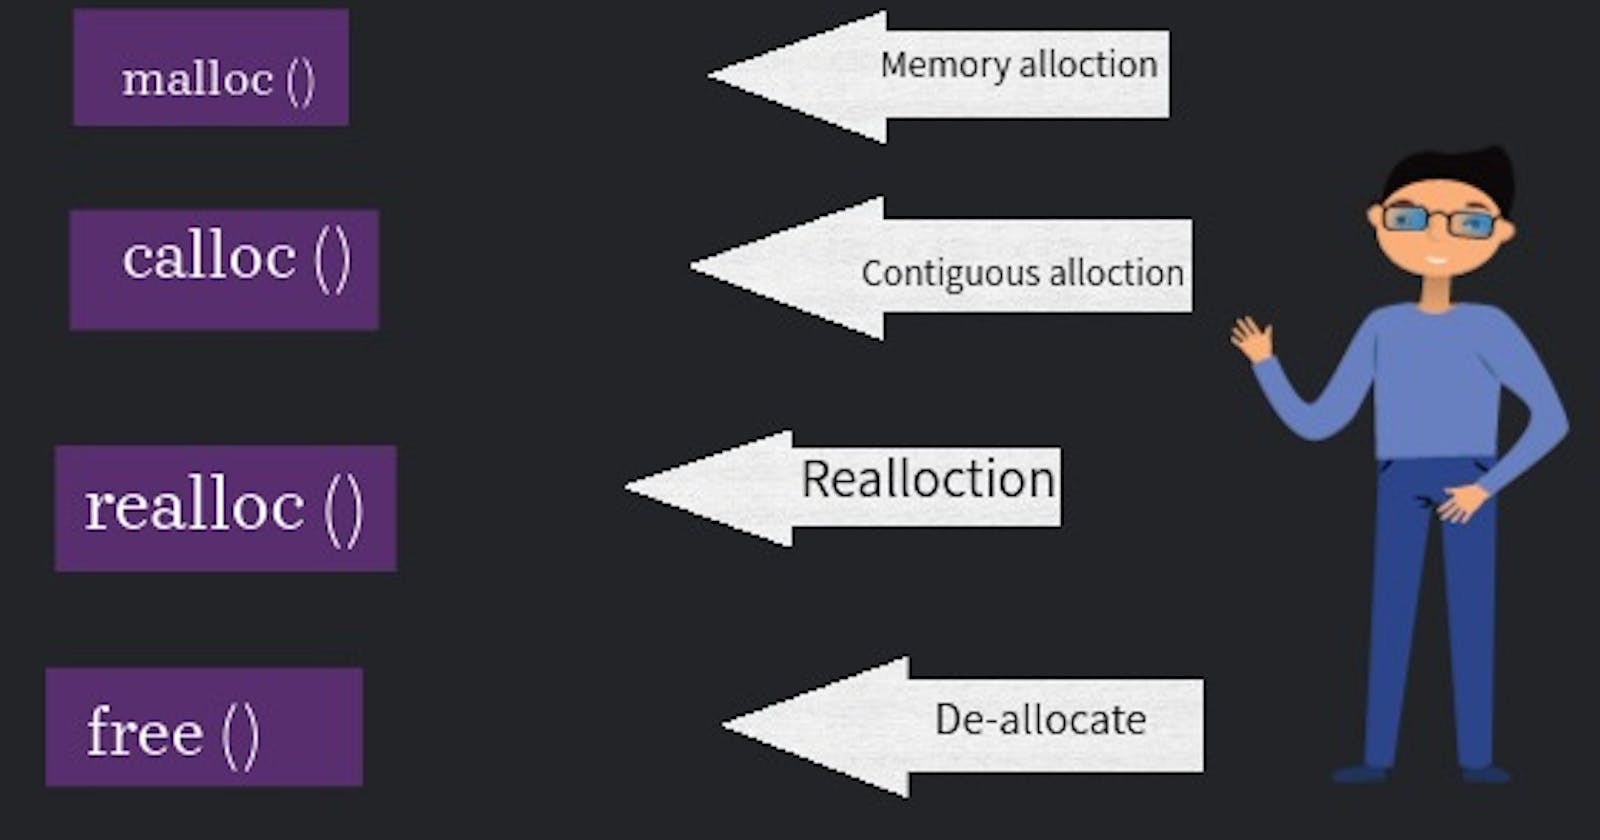 Dynamic Memory Allocation in C